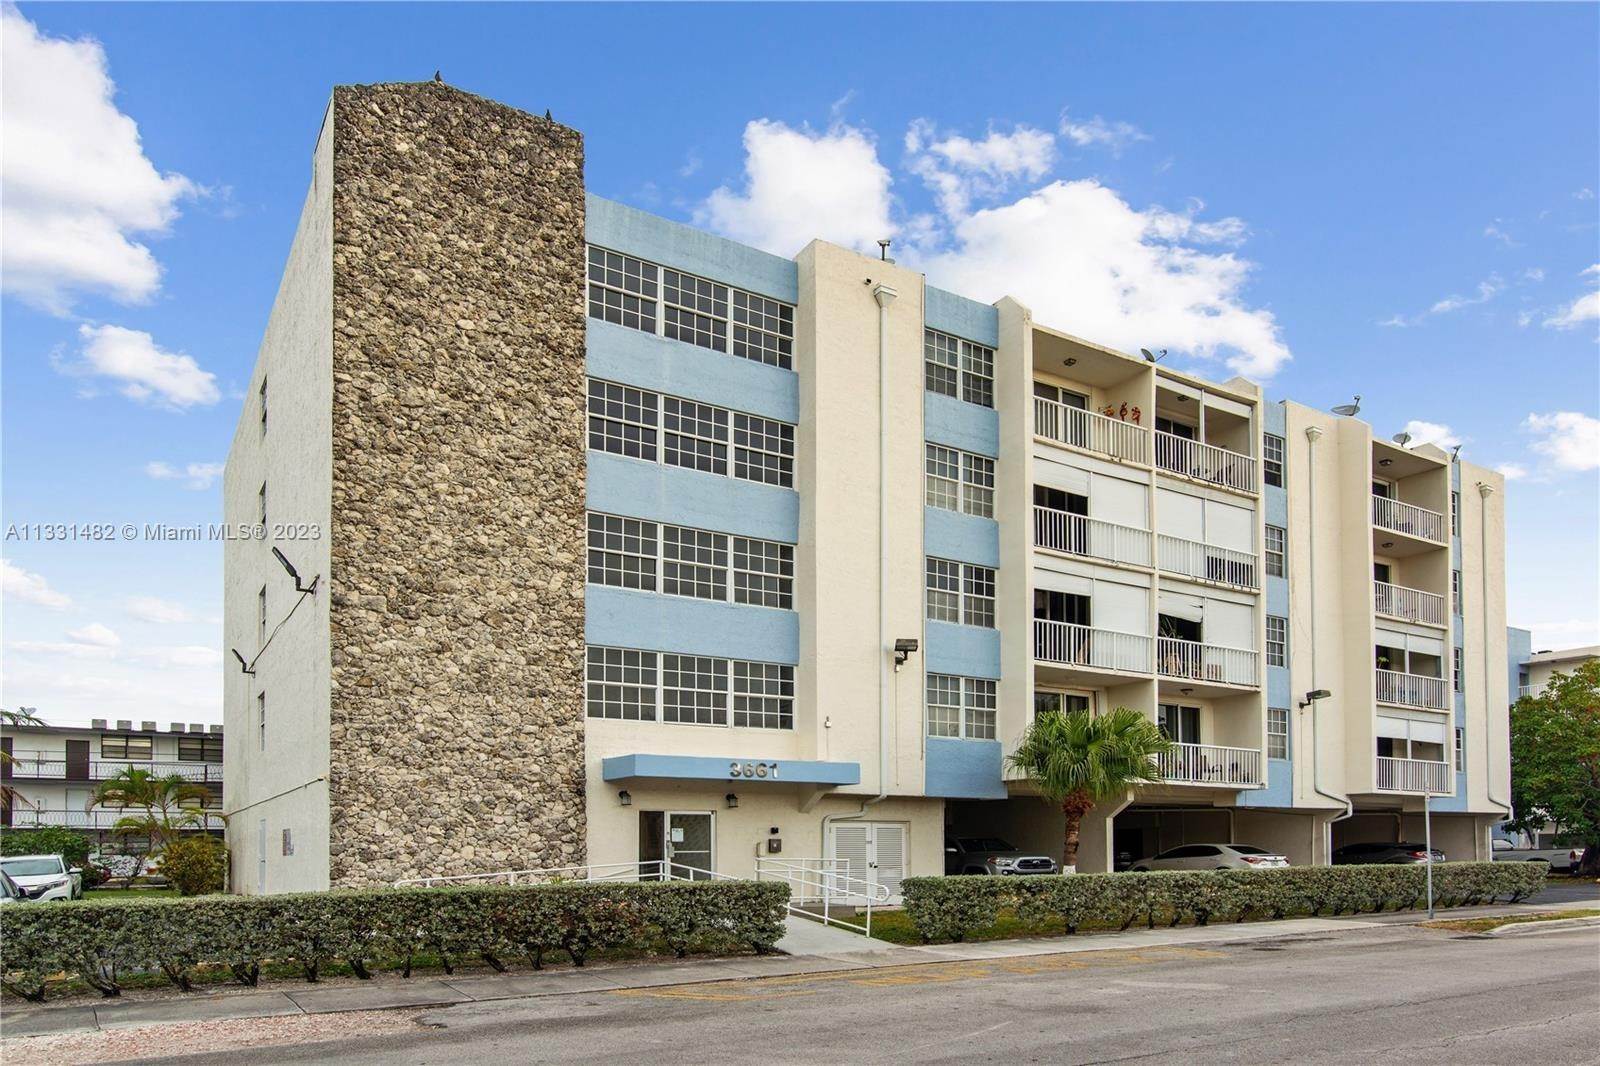 Condominium for Sale at Coral Way, Miami, FL 33135